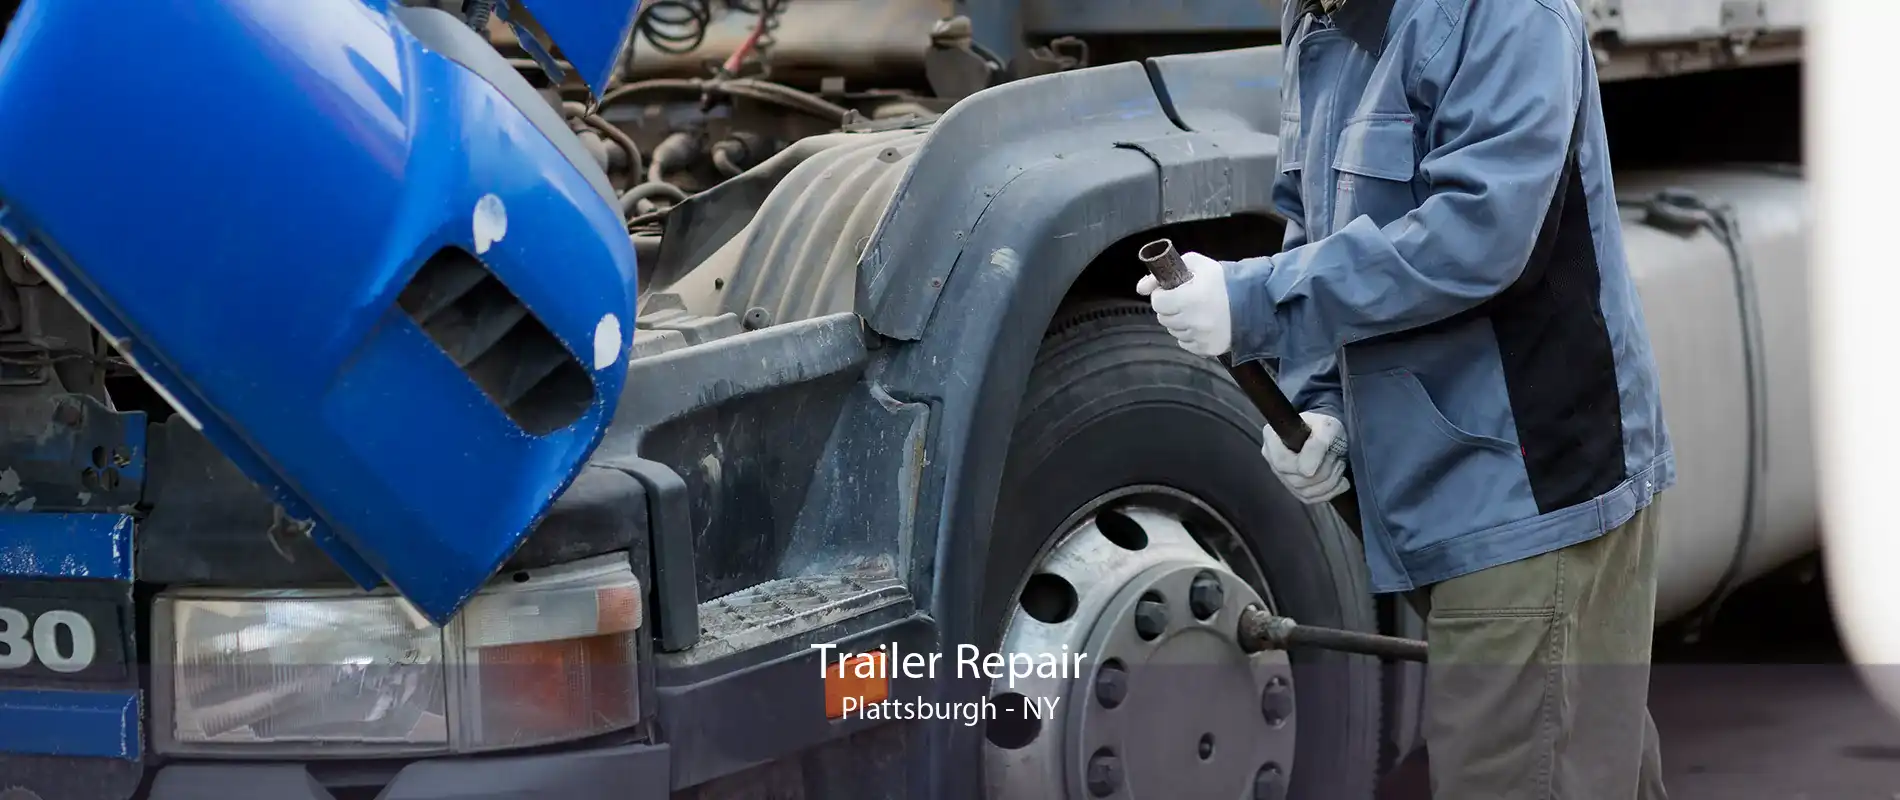 Trailer Repair Plattsburgh - NY